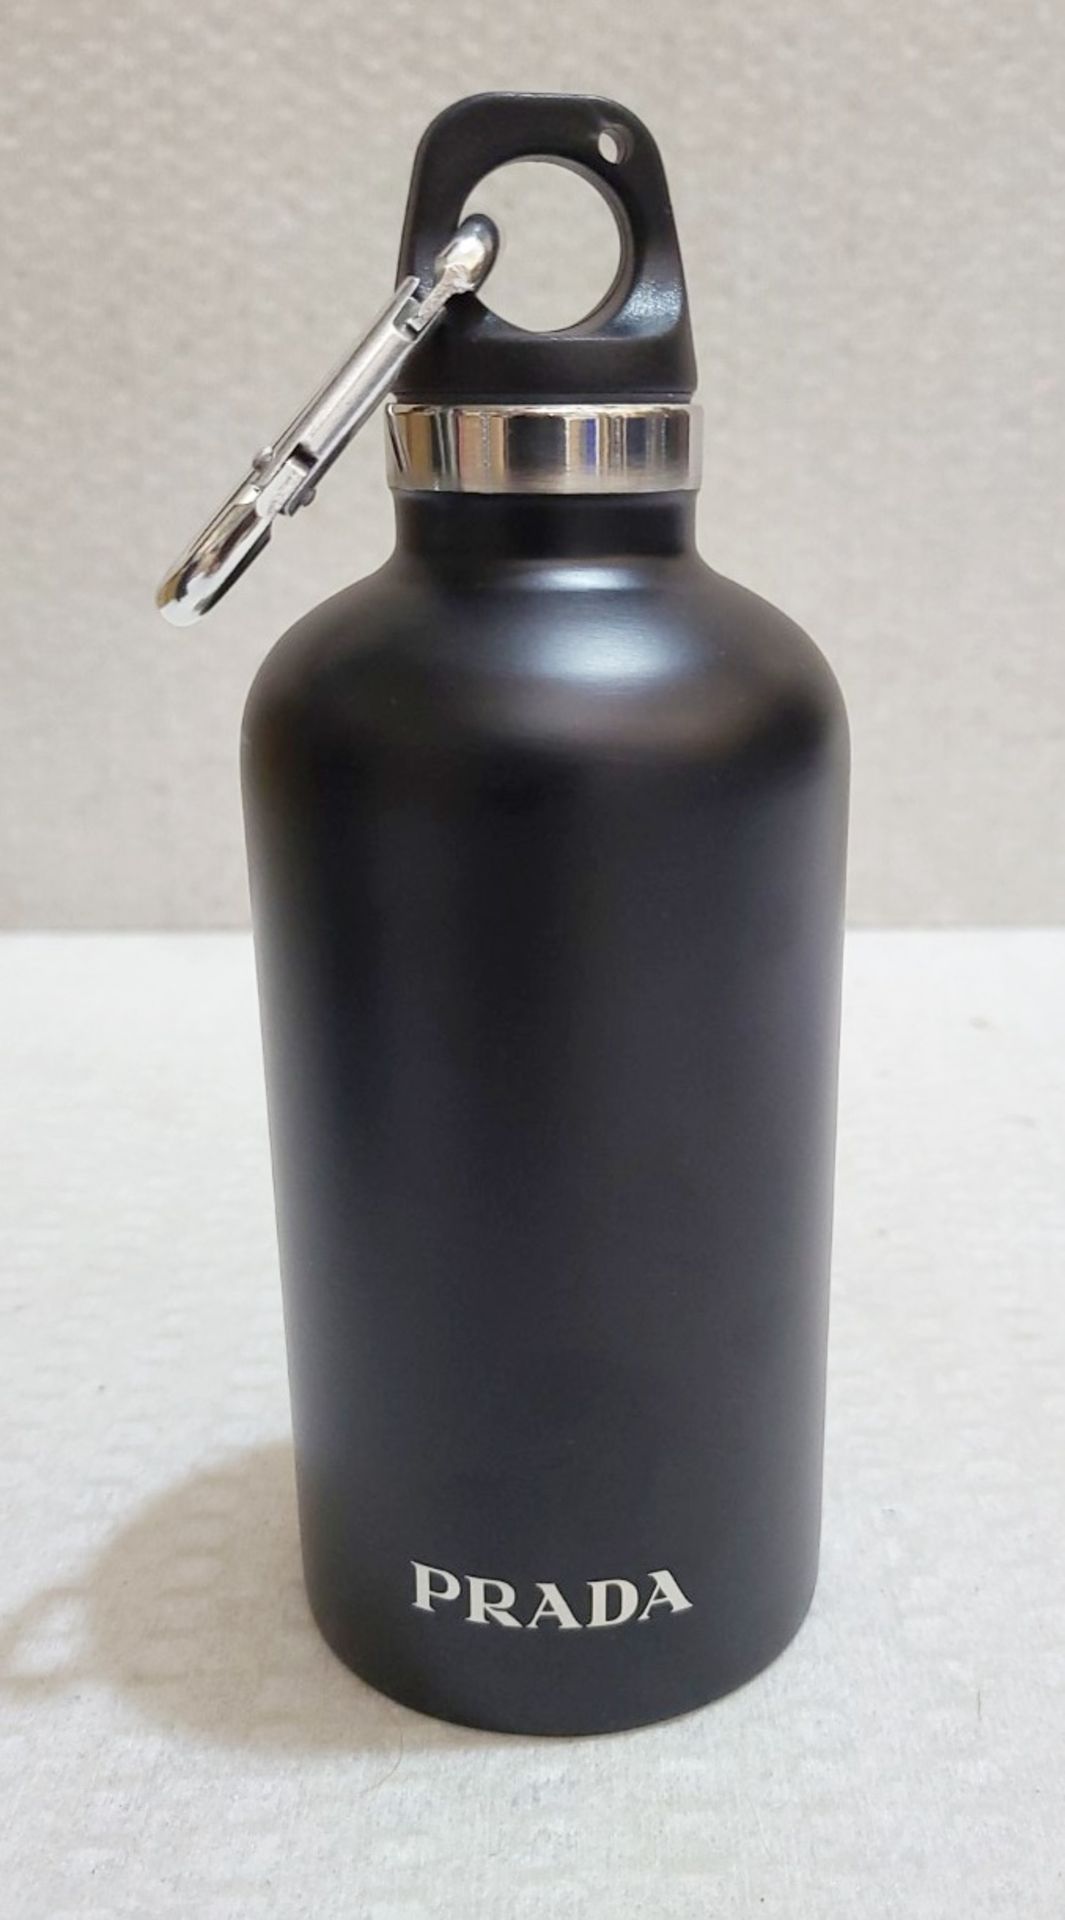 1 x PRADA Stainless Steel Insulated Water Bottle (350ml) - Original Price £85.00